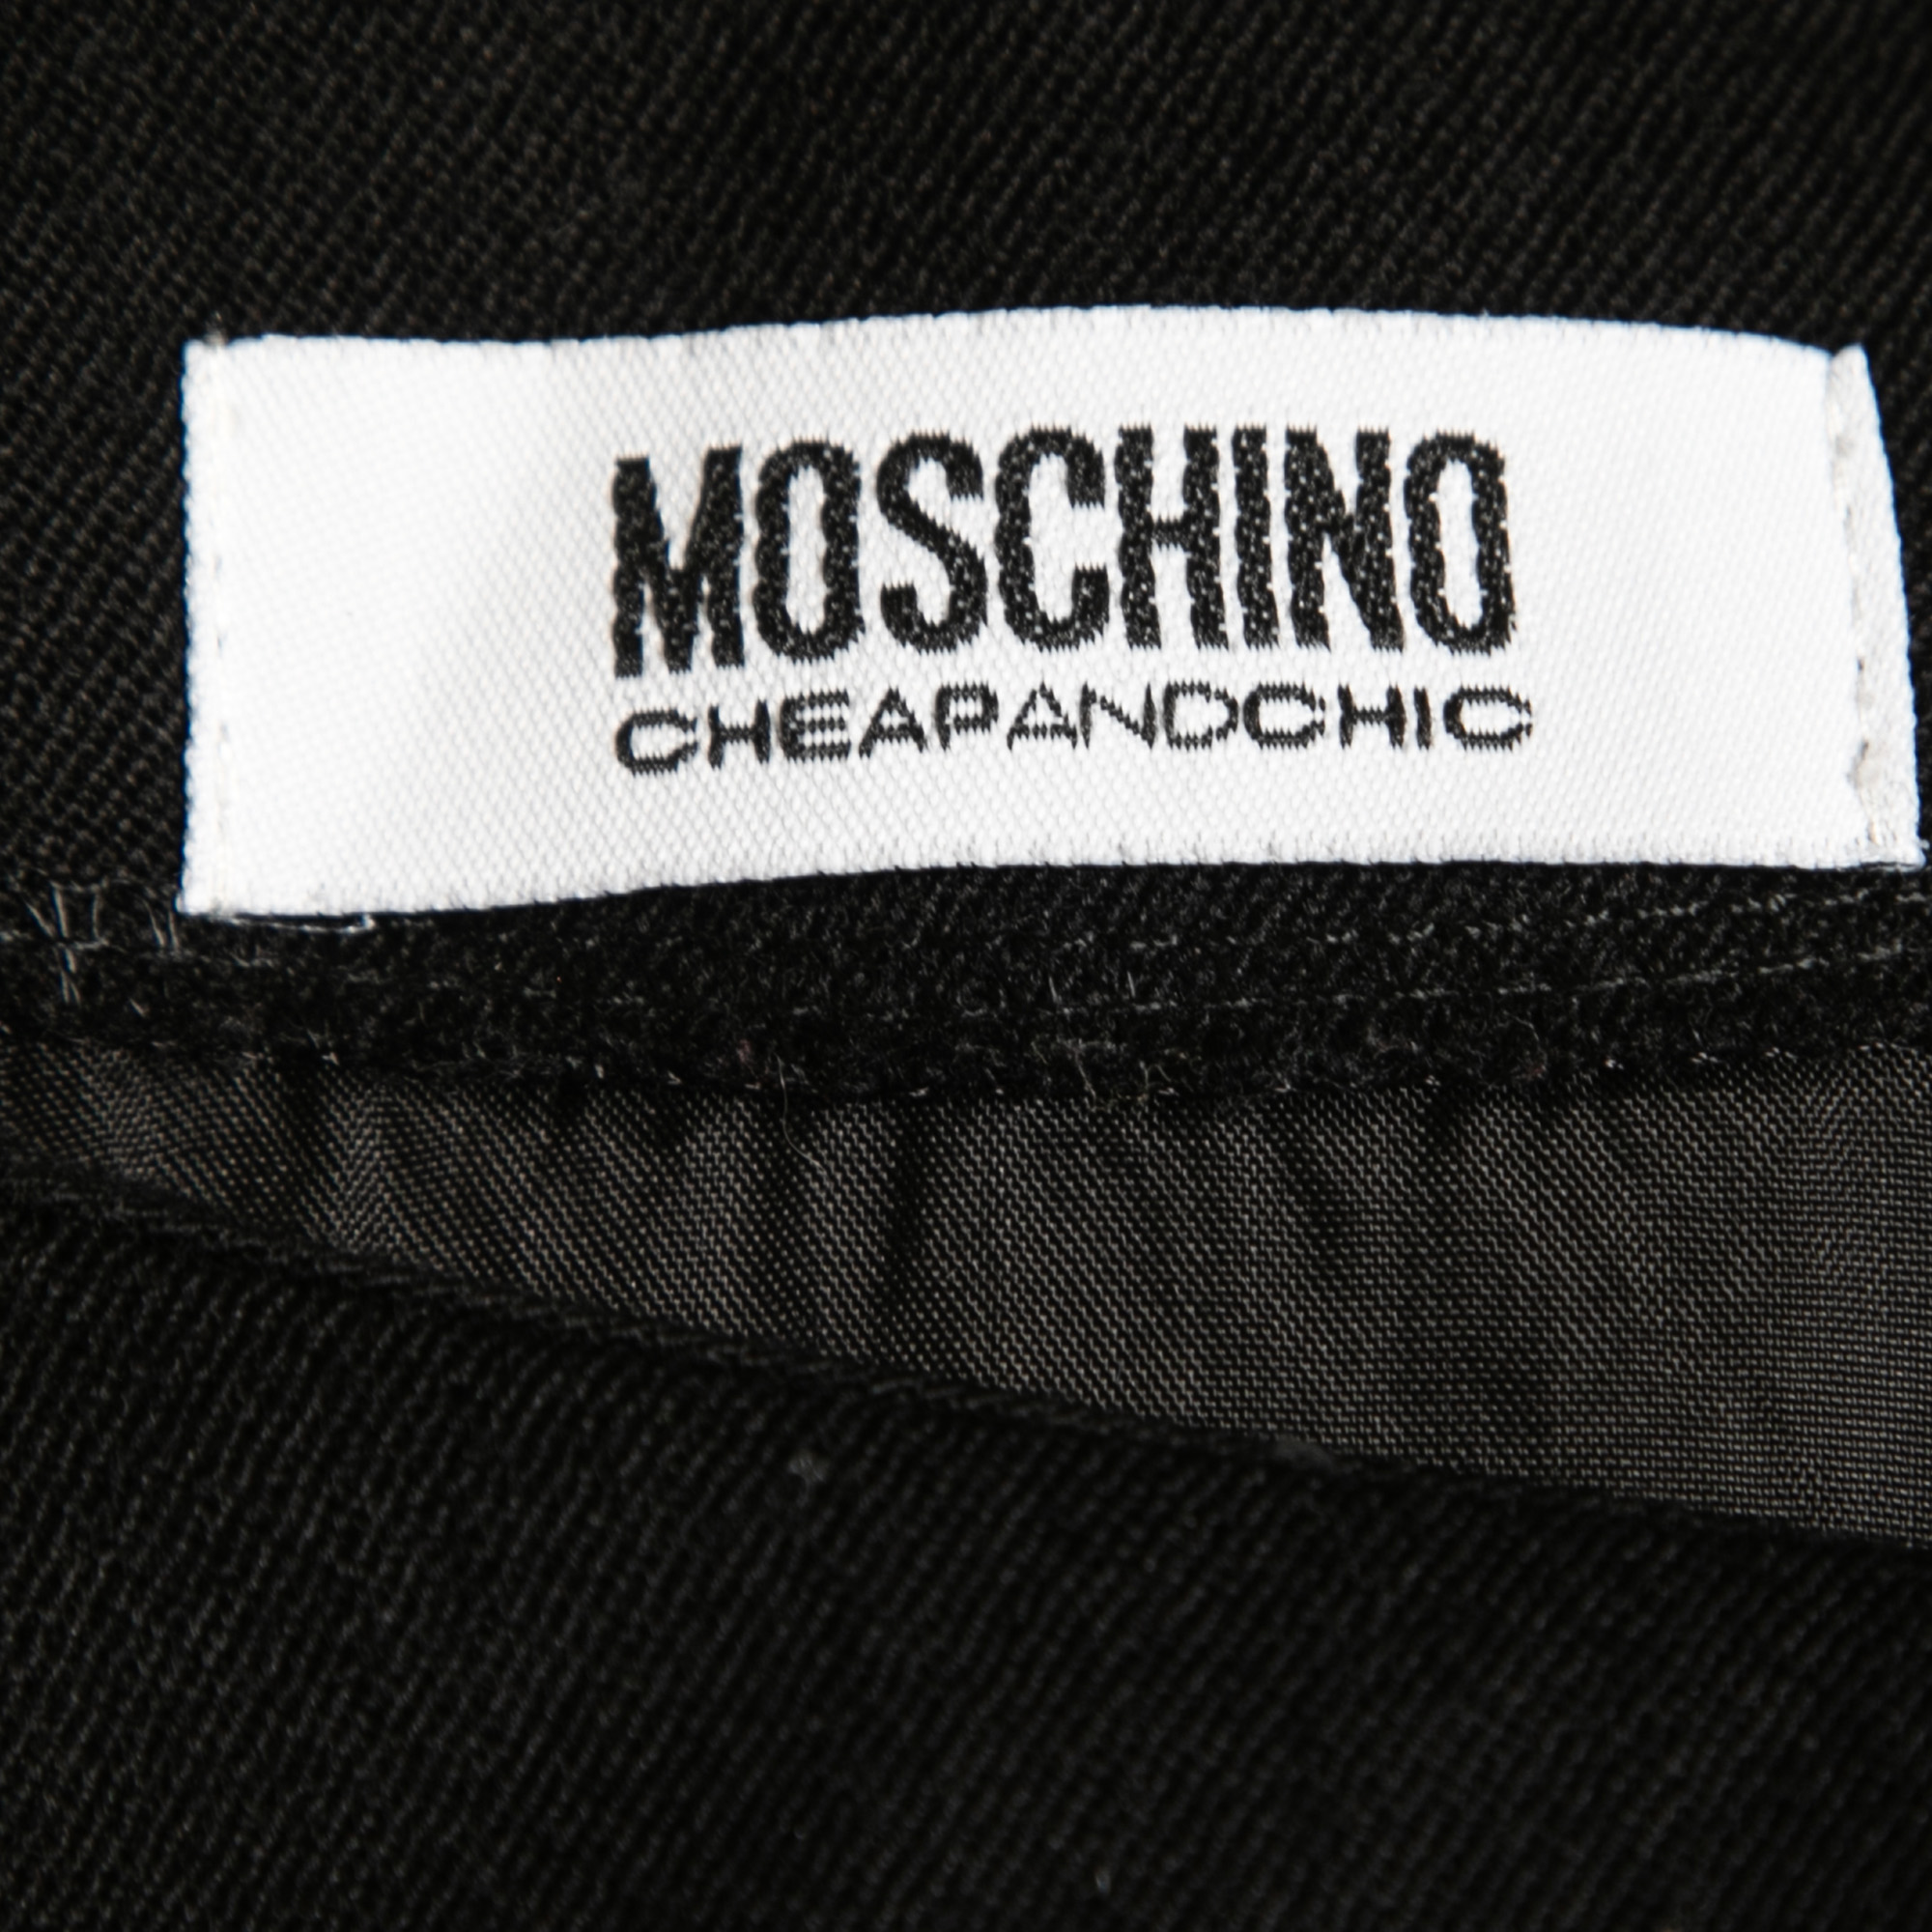 Moschino Cheap And Chic Black Wool Short Sleeve Shift Dress L